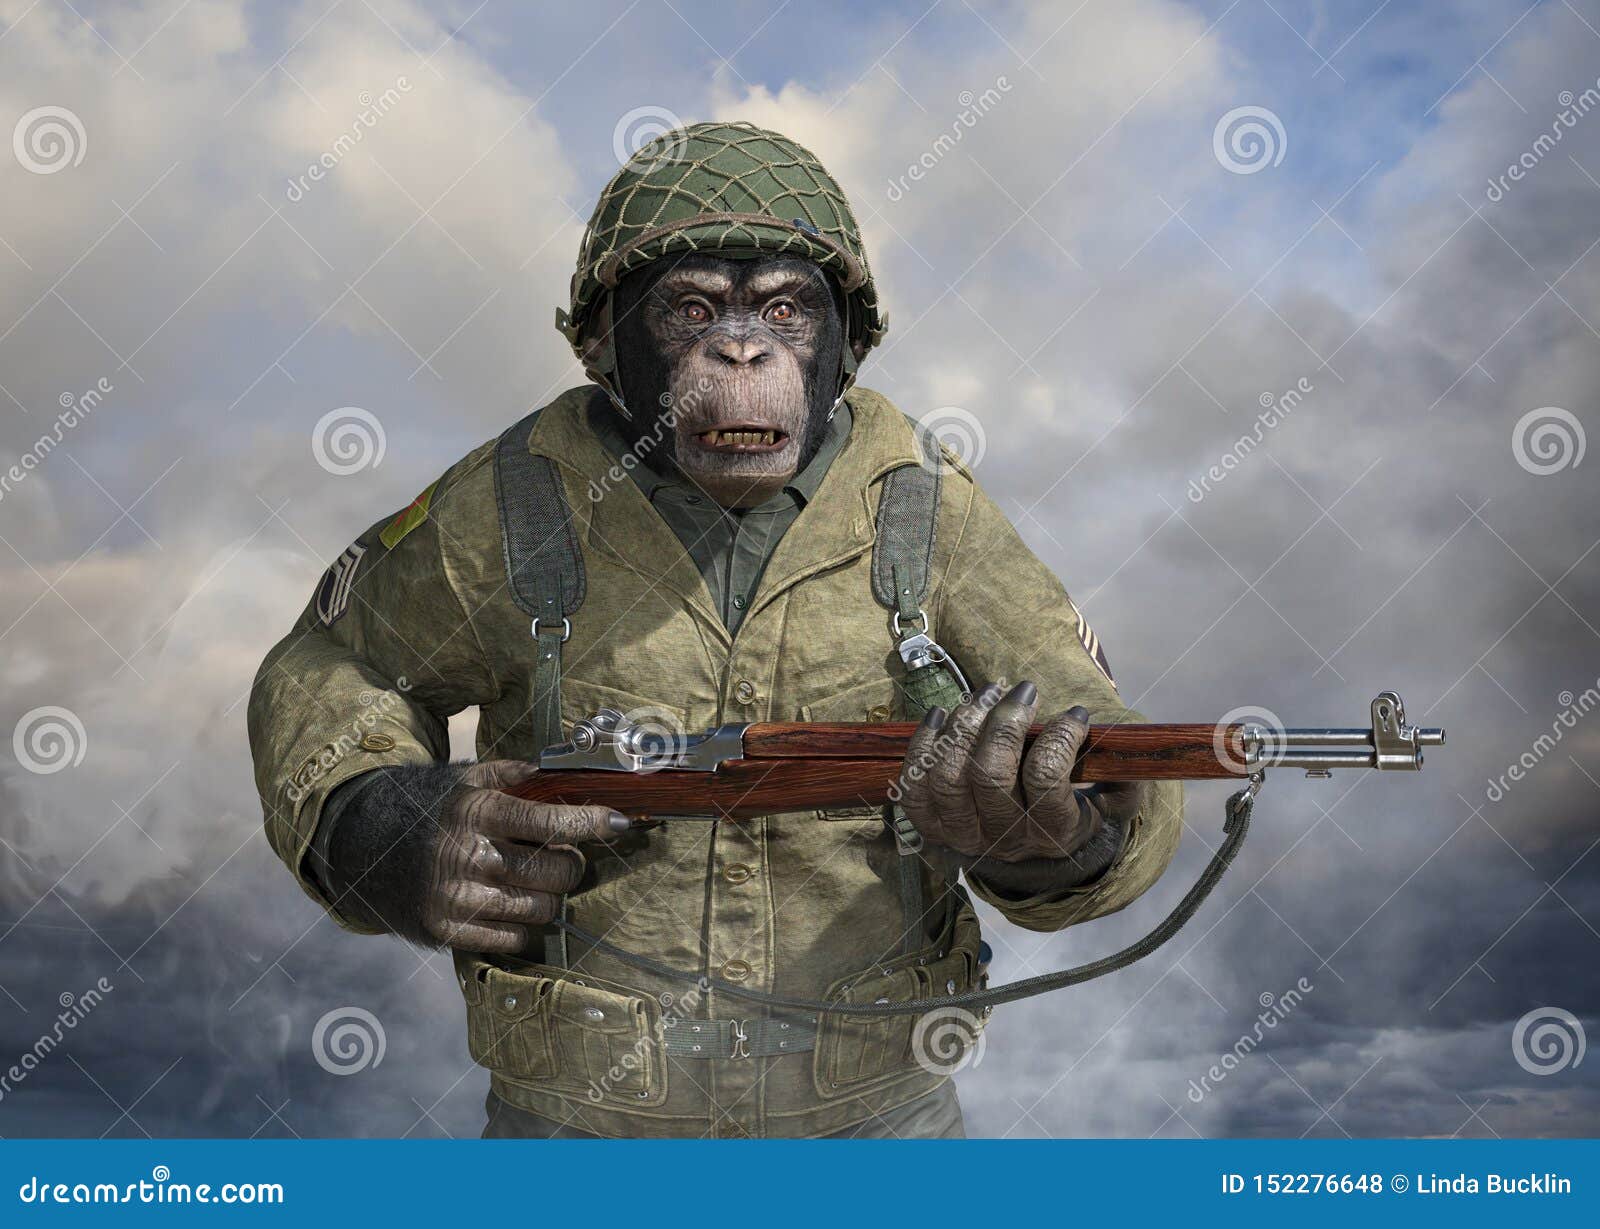 chimp-soldier-carrying-gun-d-render-chimp-soldier-152276648.jpg